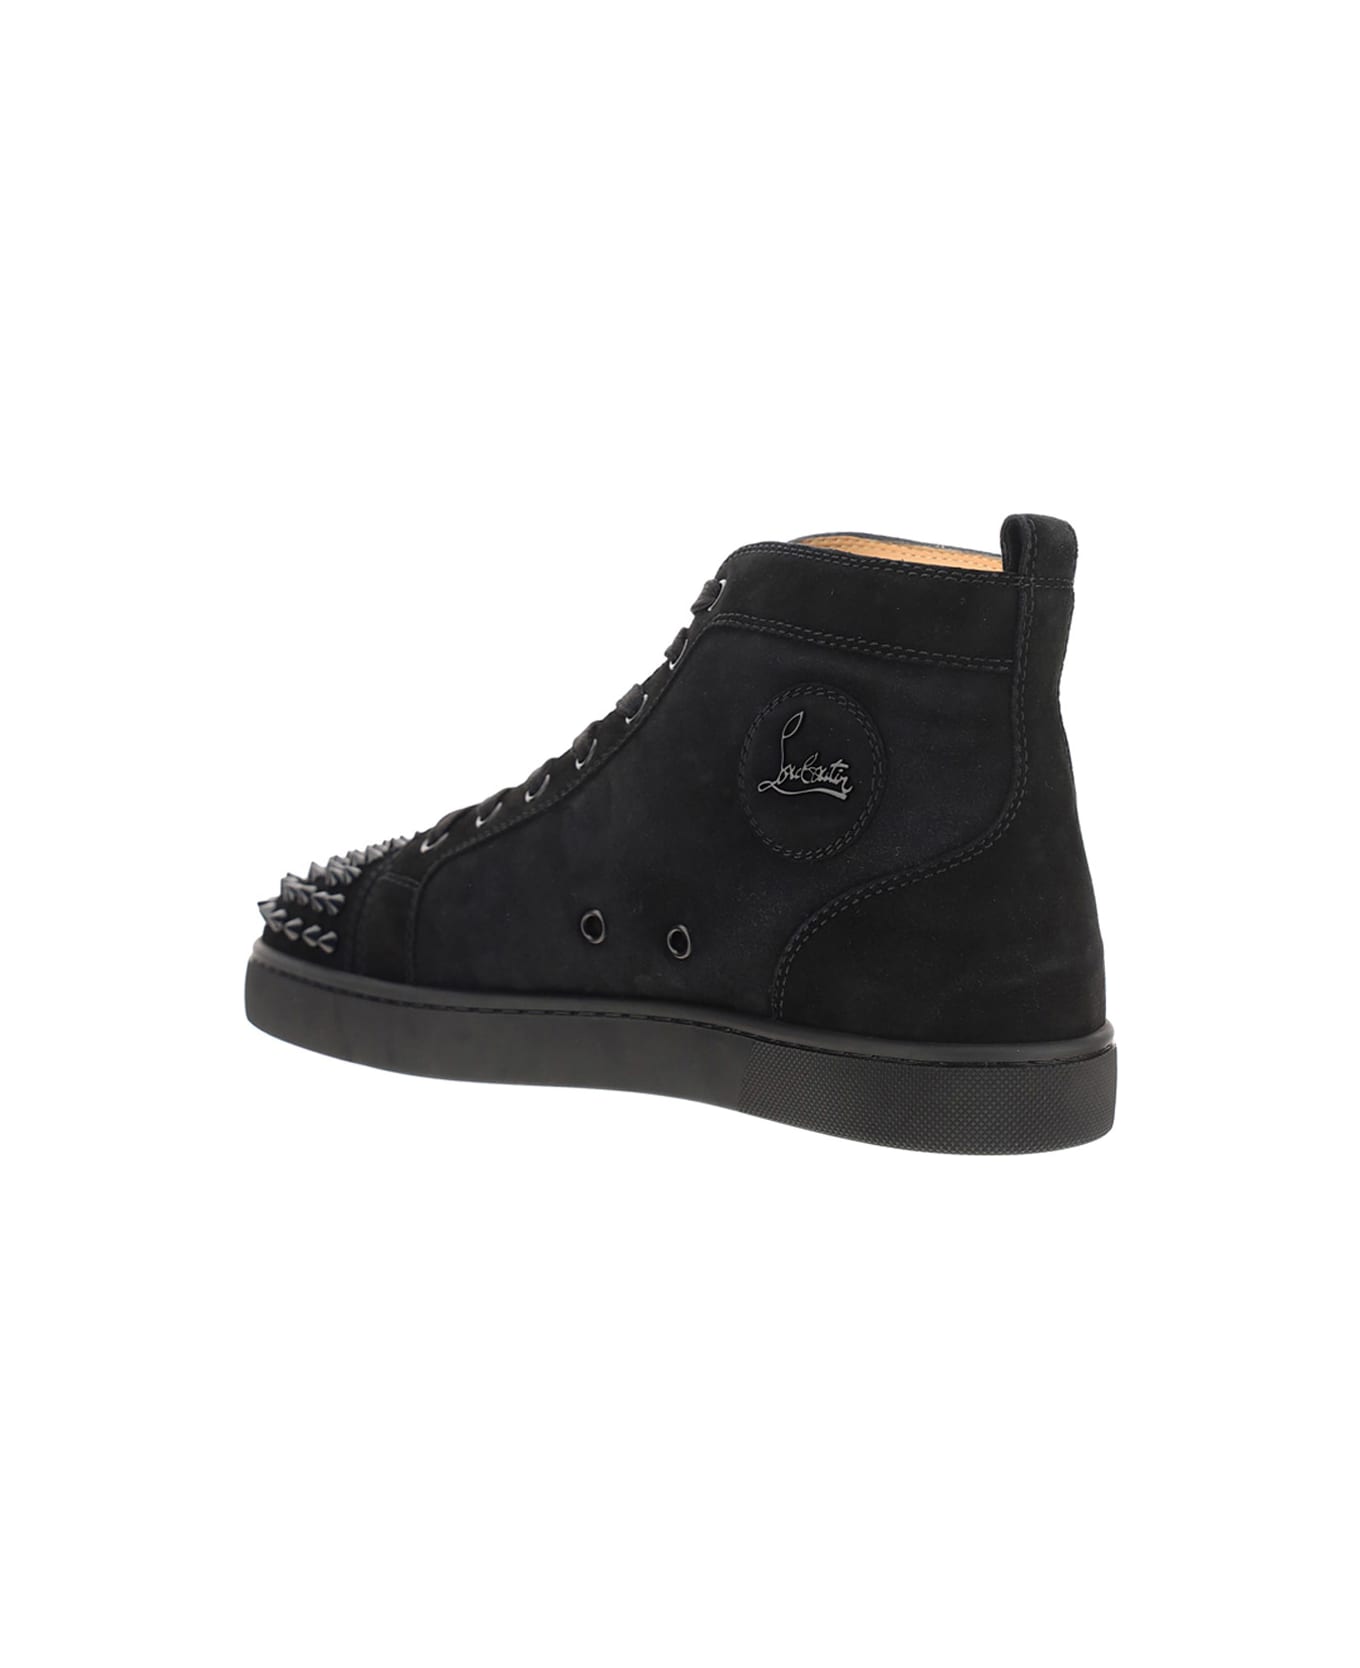 Boot Louboutin Lou Spikes Sneakers - Black/black/bk